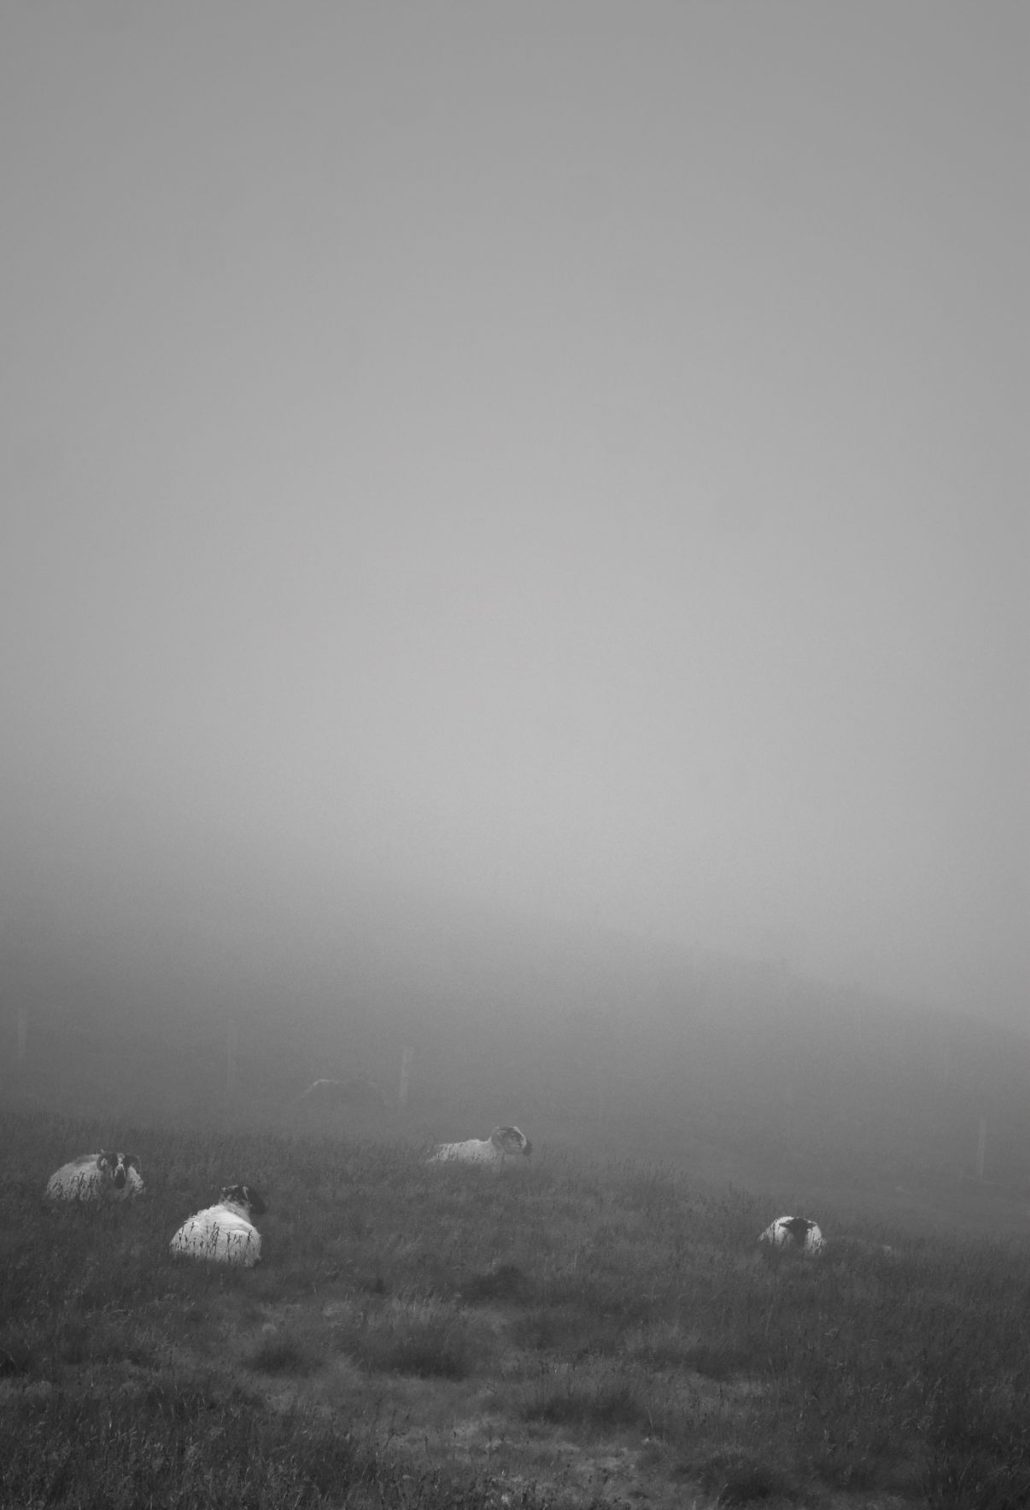 Foggy sheep